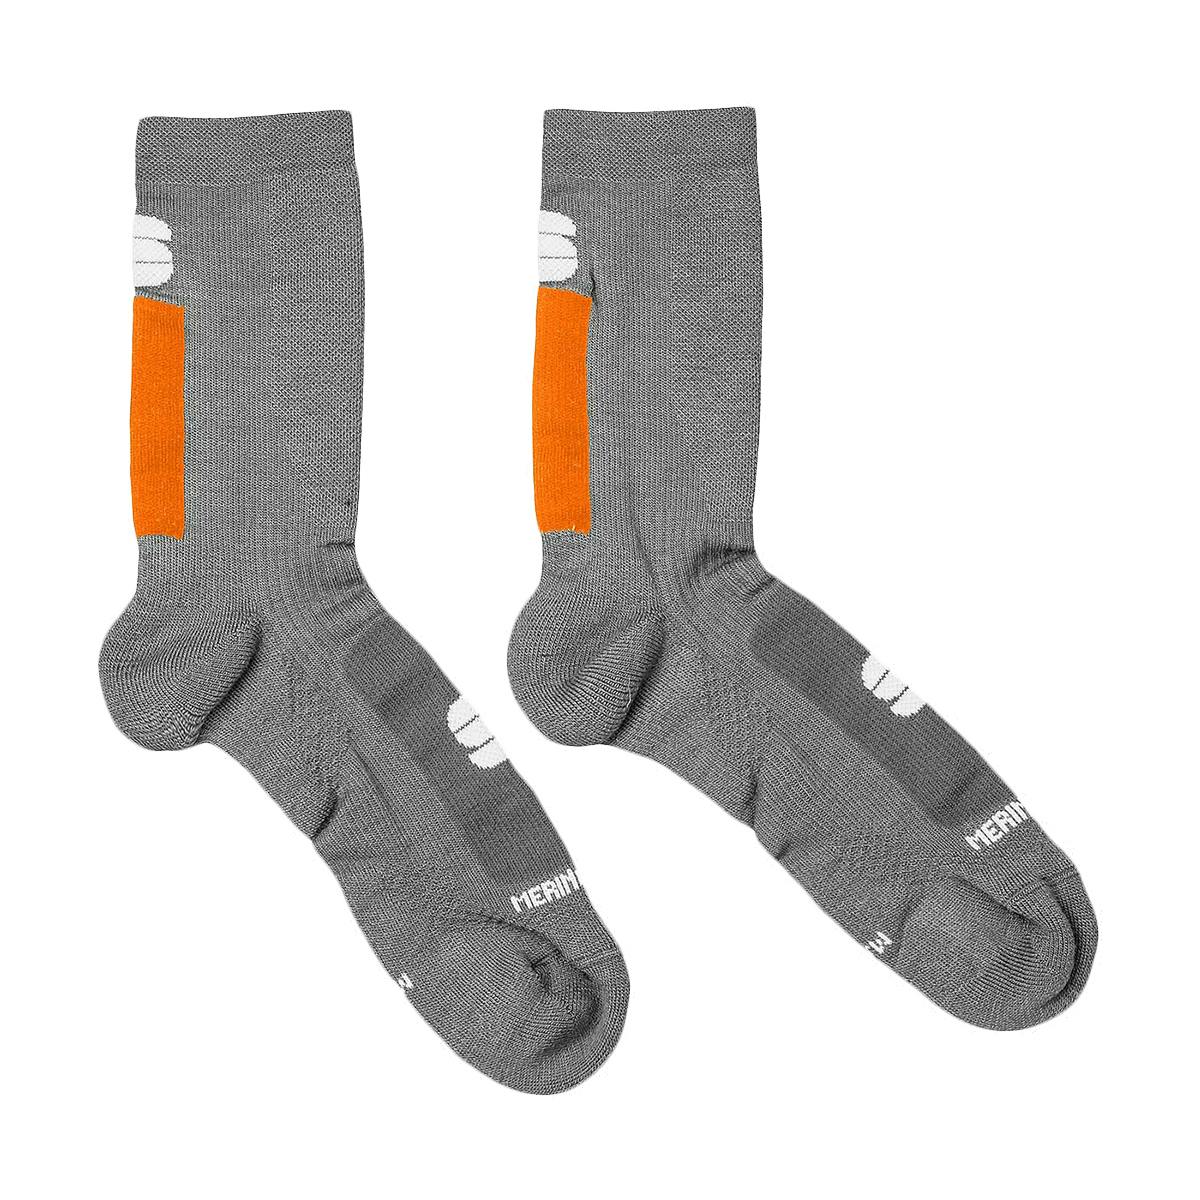 Sportful Merino Wool 18 Socks - Cement Orange - M/L